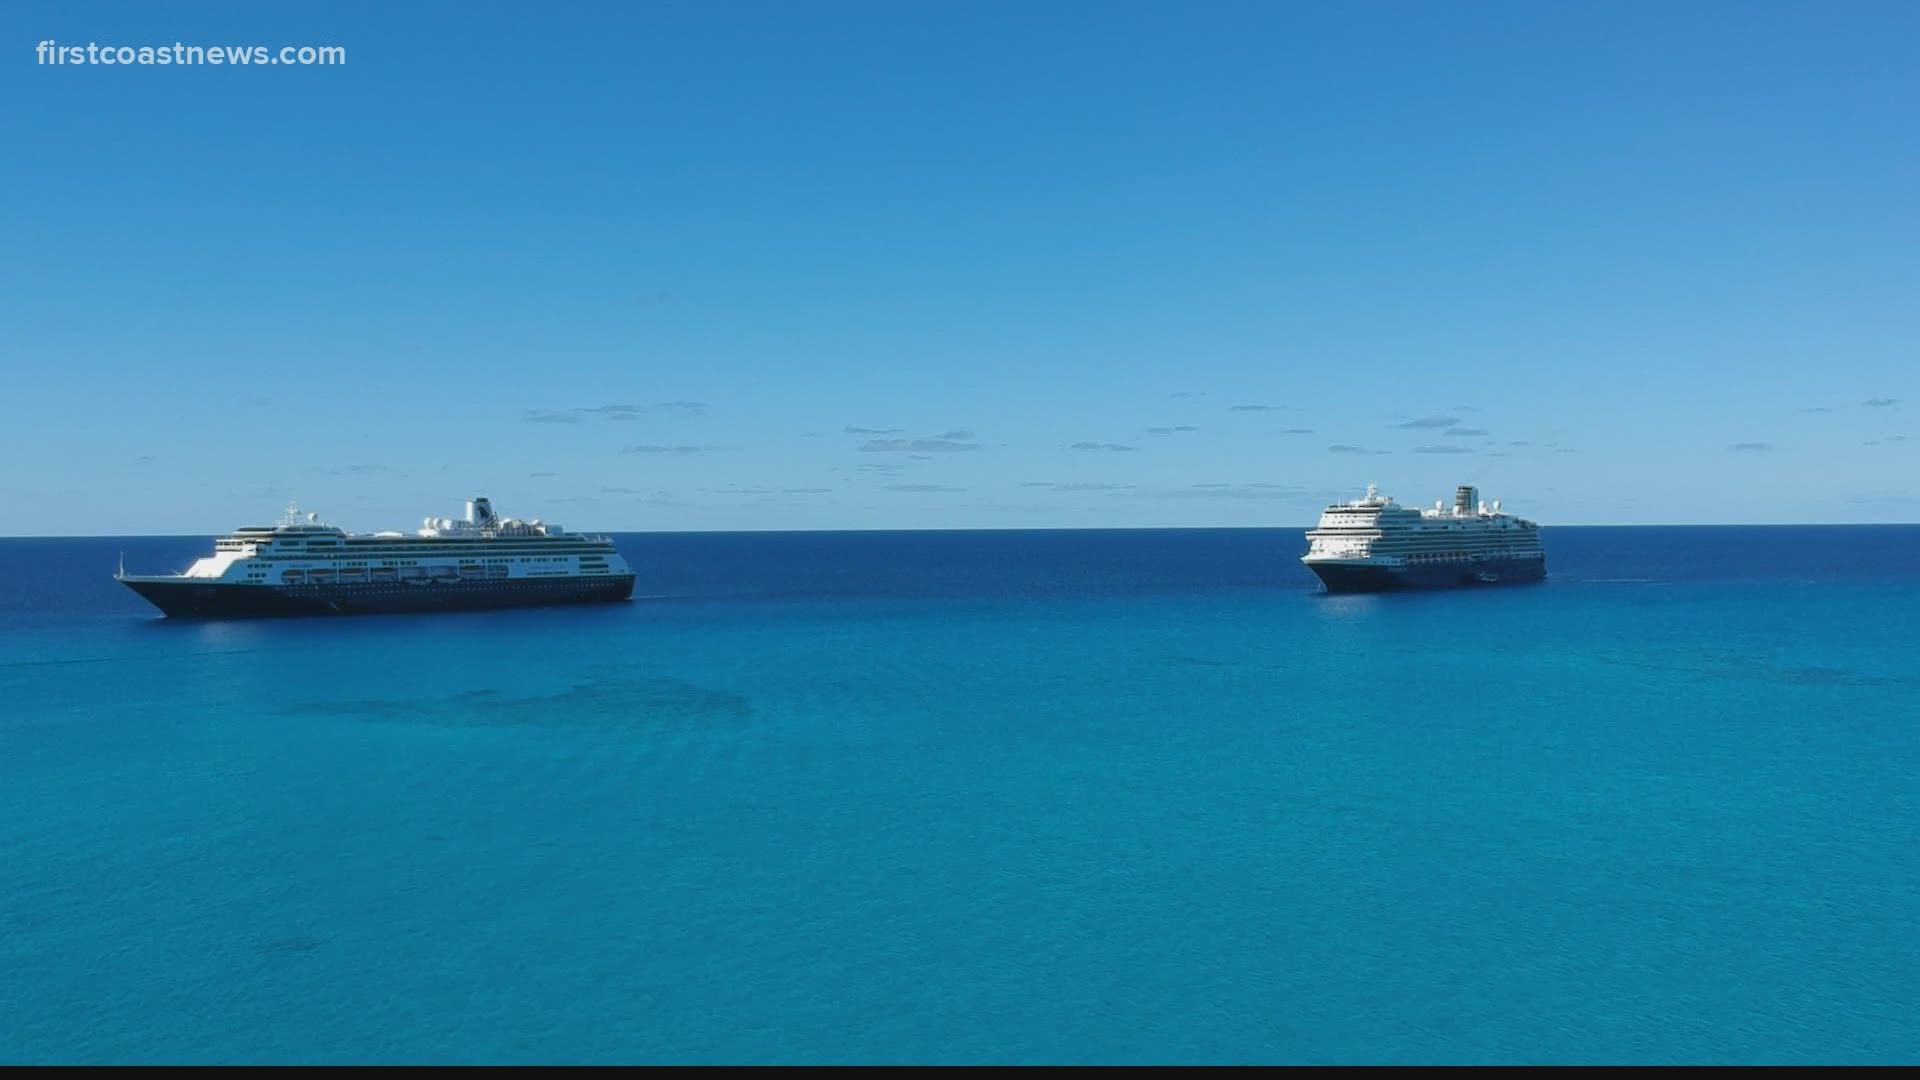 Many cruise ships are stuck out at sea amid the coronavirus pandemic.